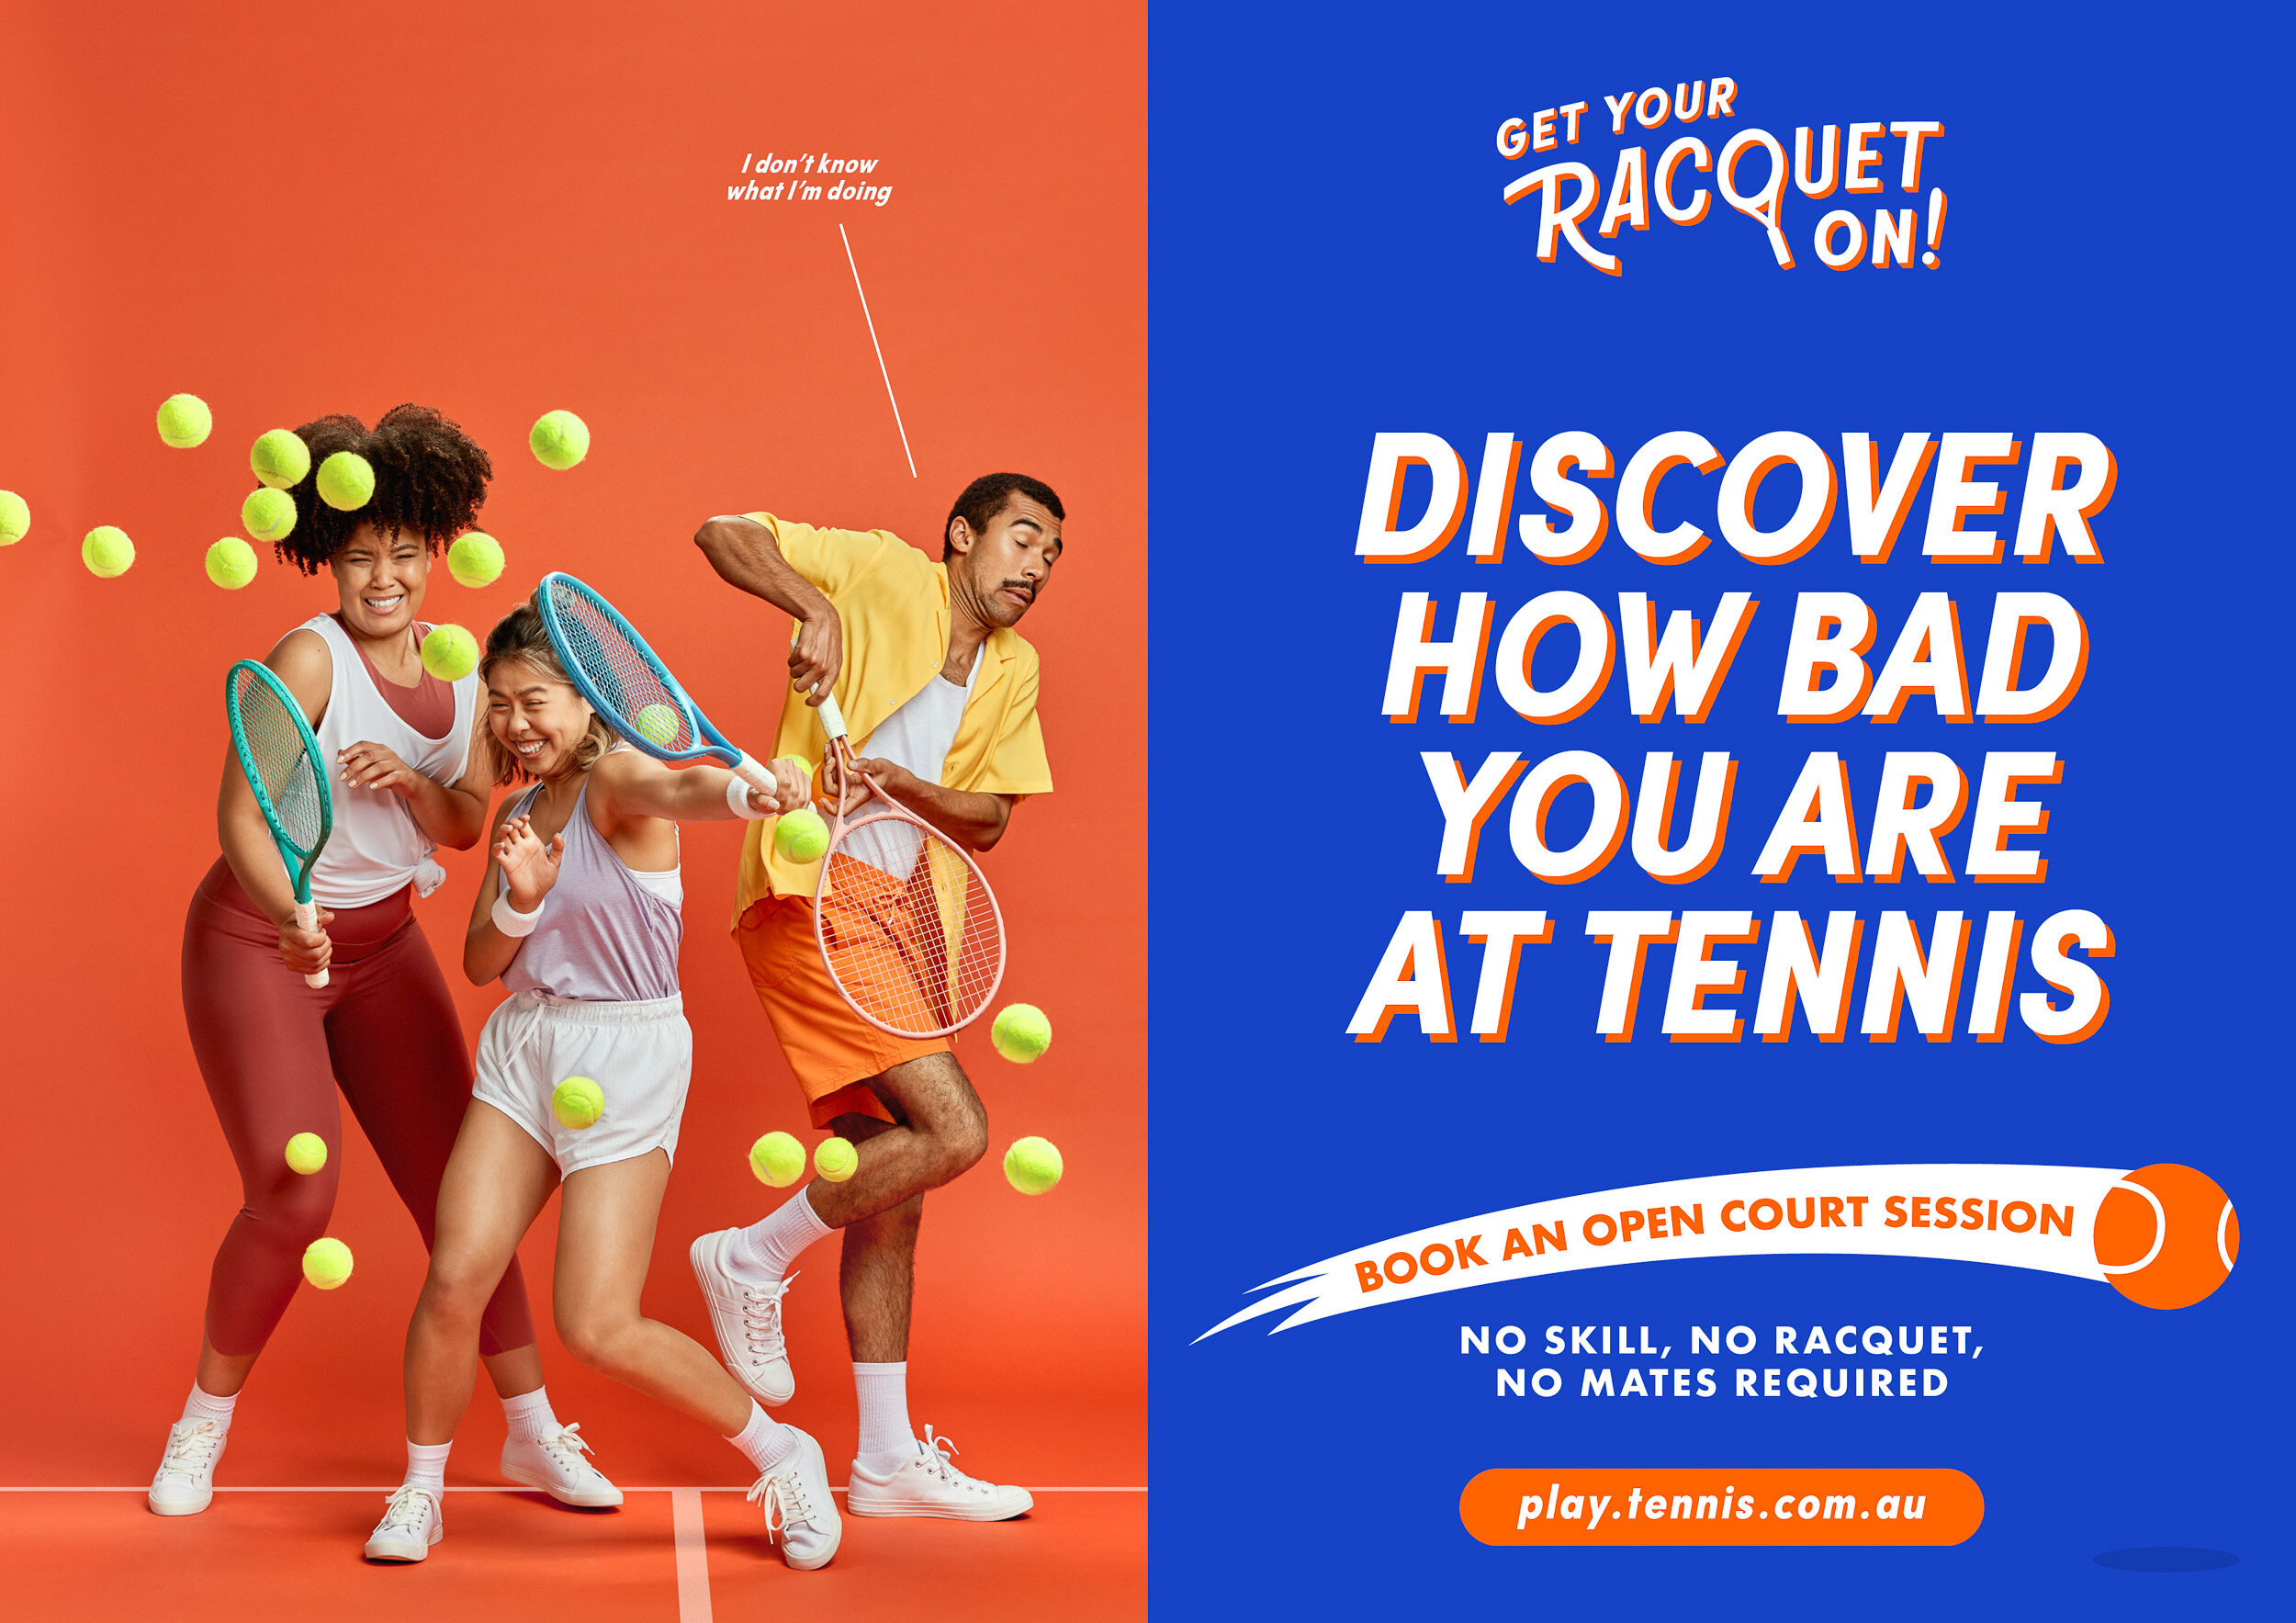 Tennis Australia - Get Your Racquet On campaign